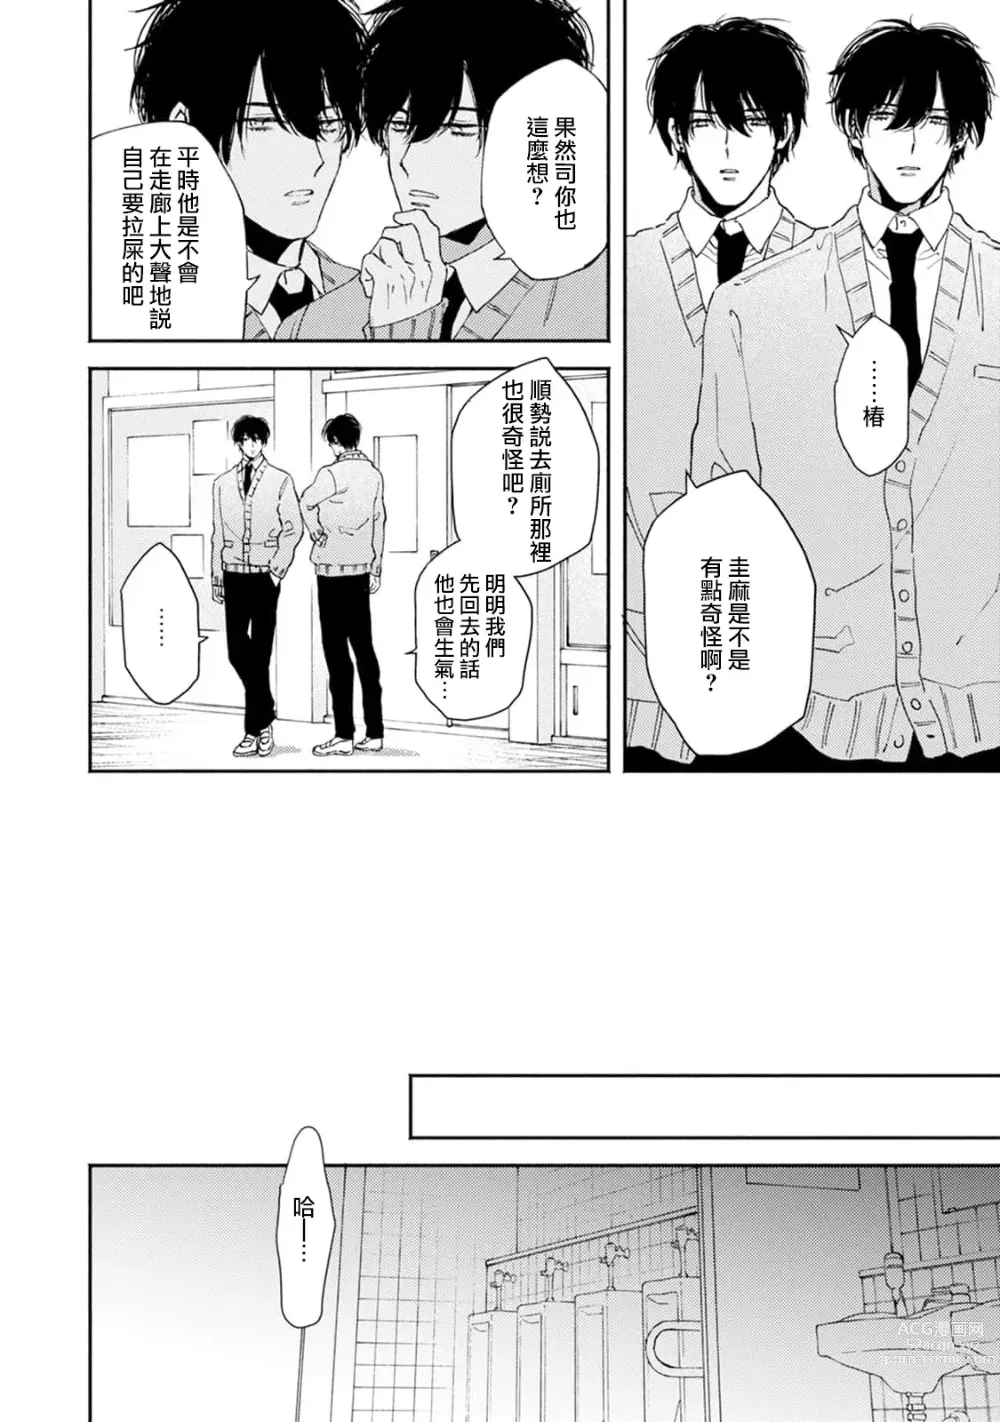 Page 7 of manga 你们都会好好爱我的对吧？1